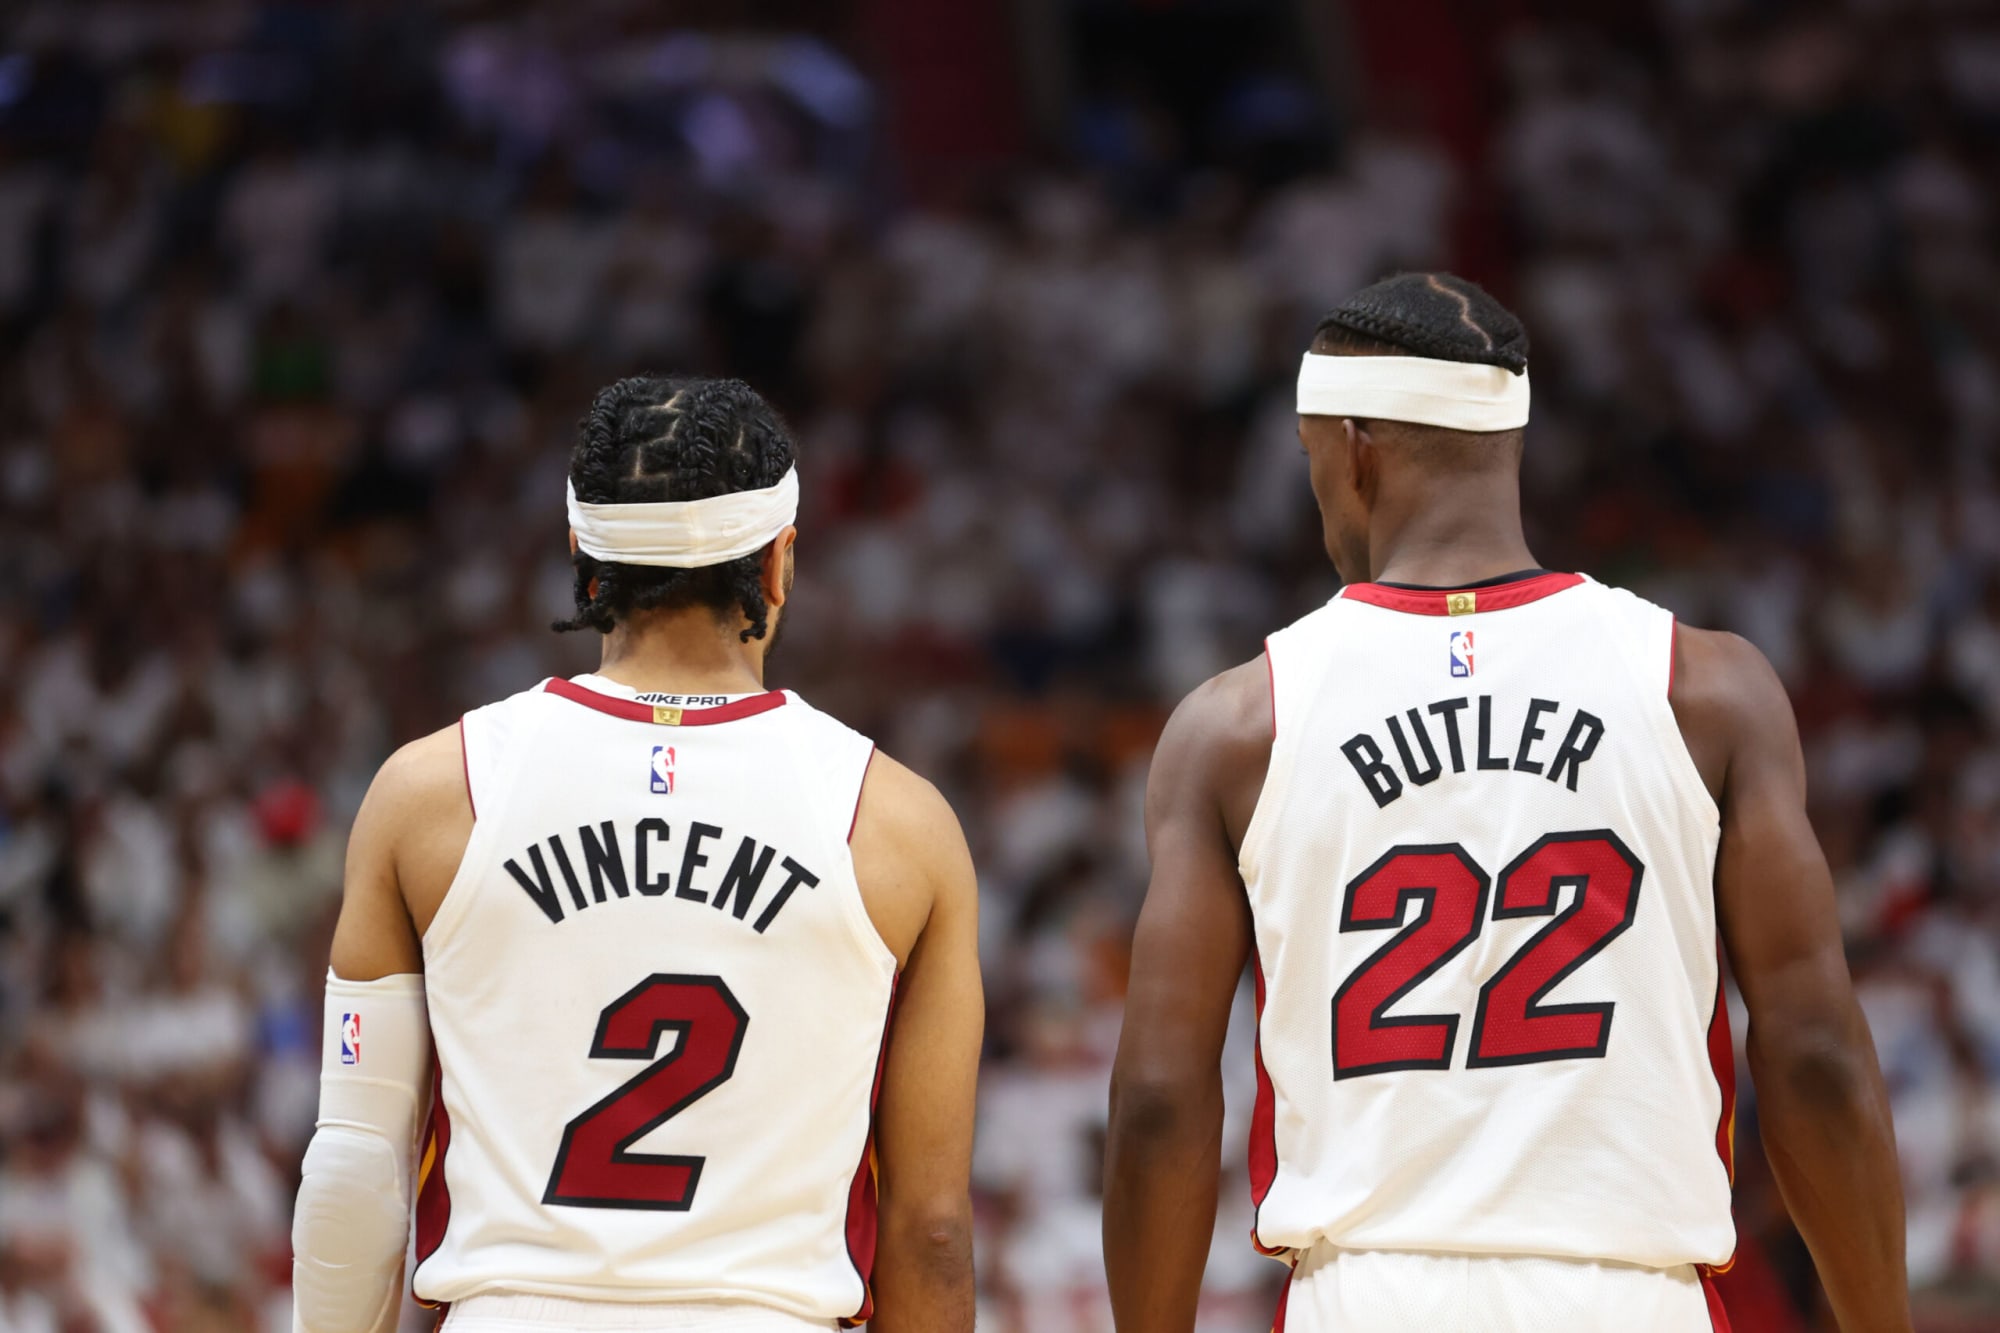 Miami Heat 2023 offseason primer free agents, trades, draft needs, more